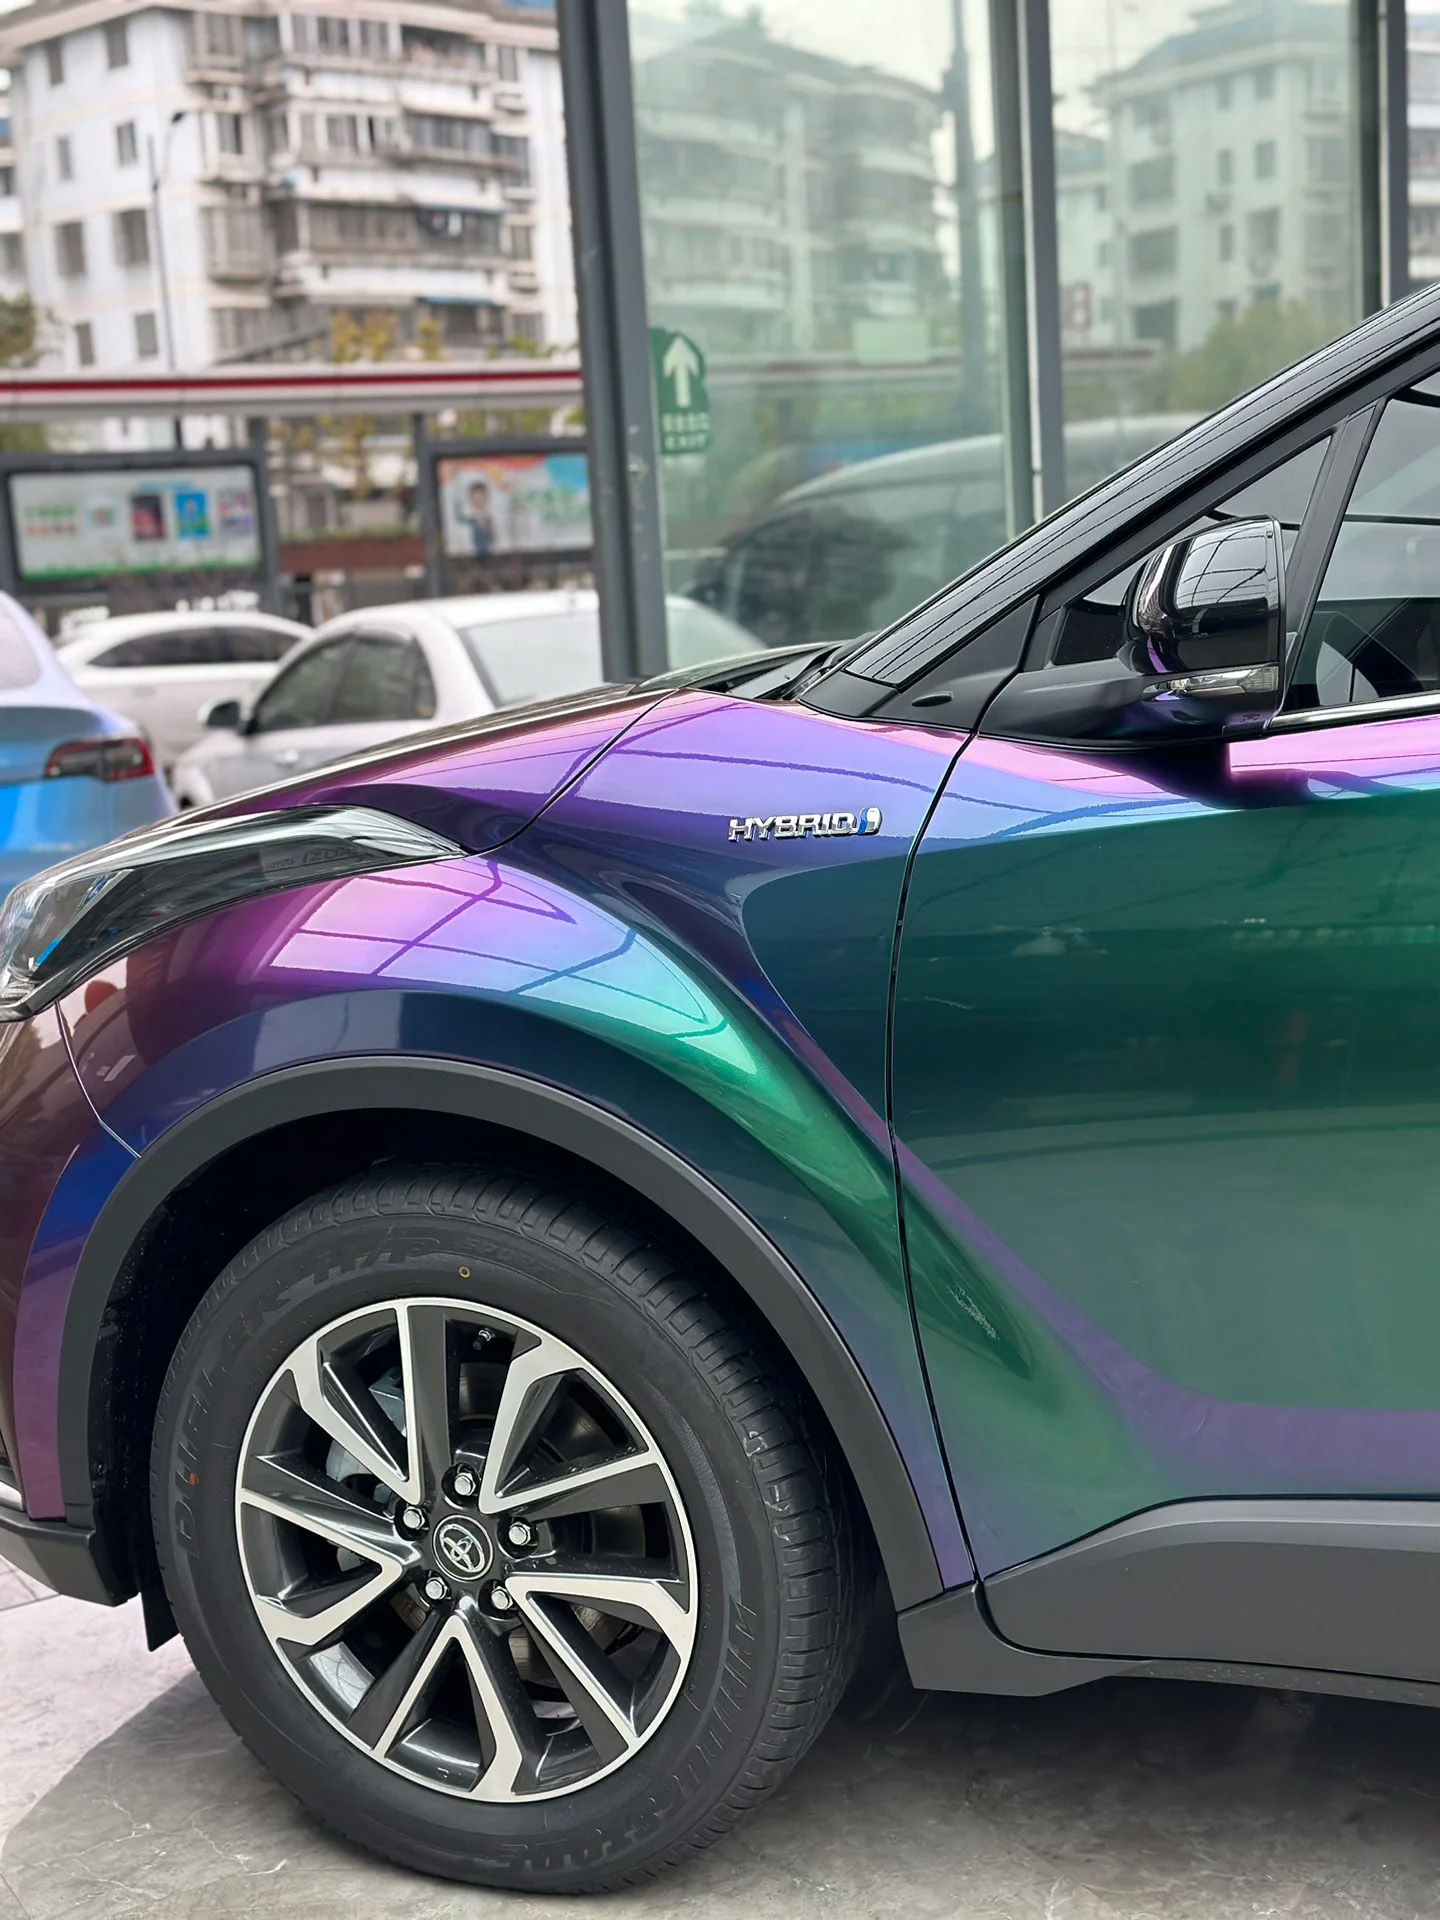 Cool Gloss Metallic Rainbow Green Vinyl Car Wrap - ALUKOYINYL